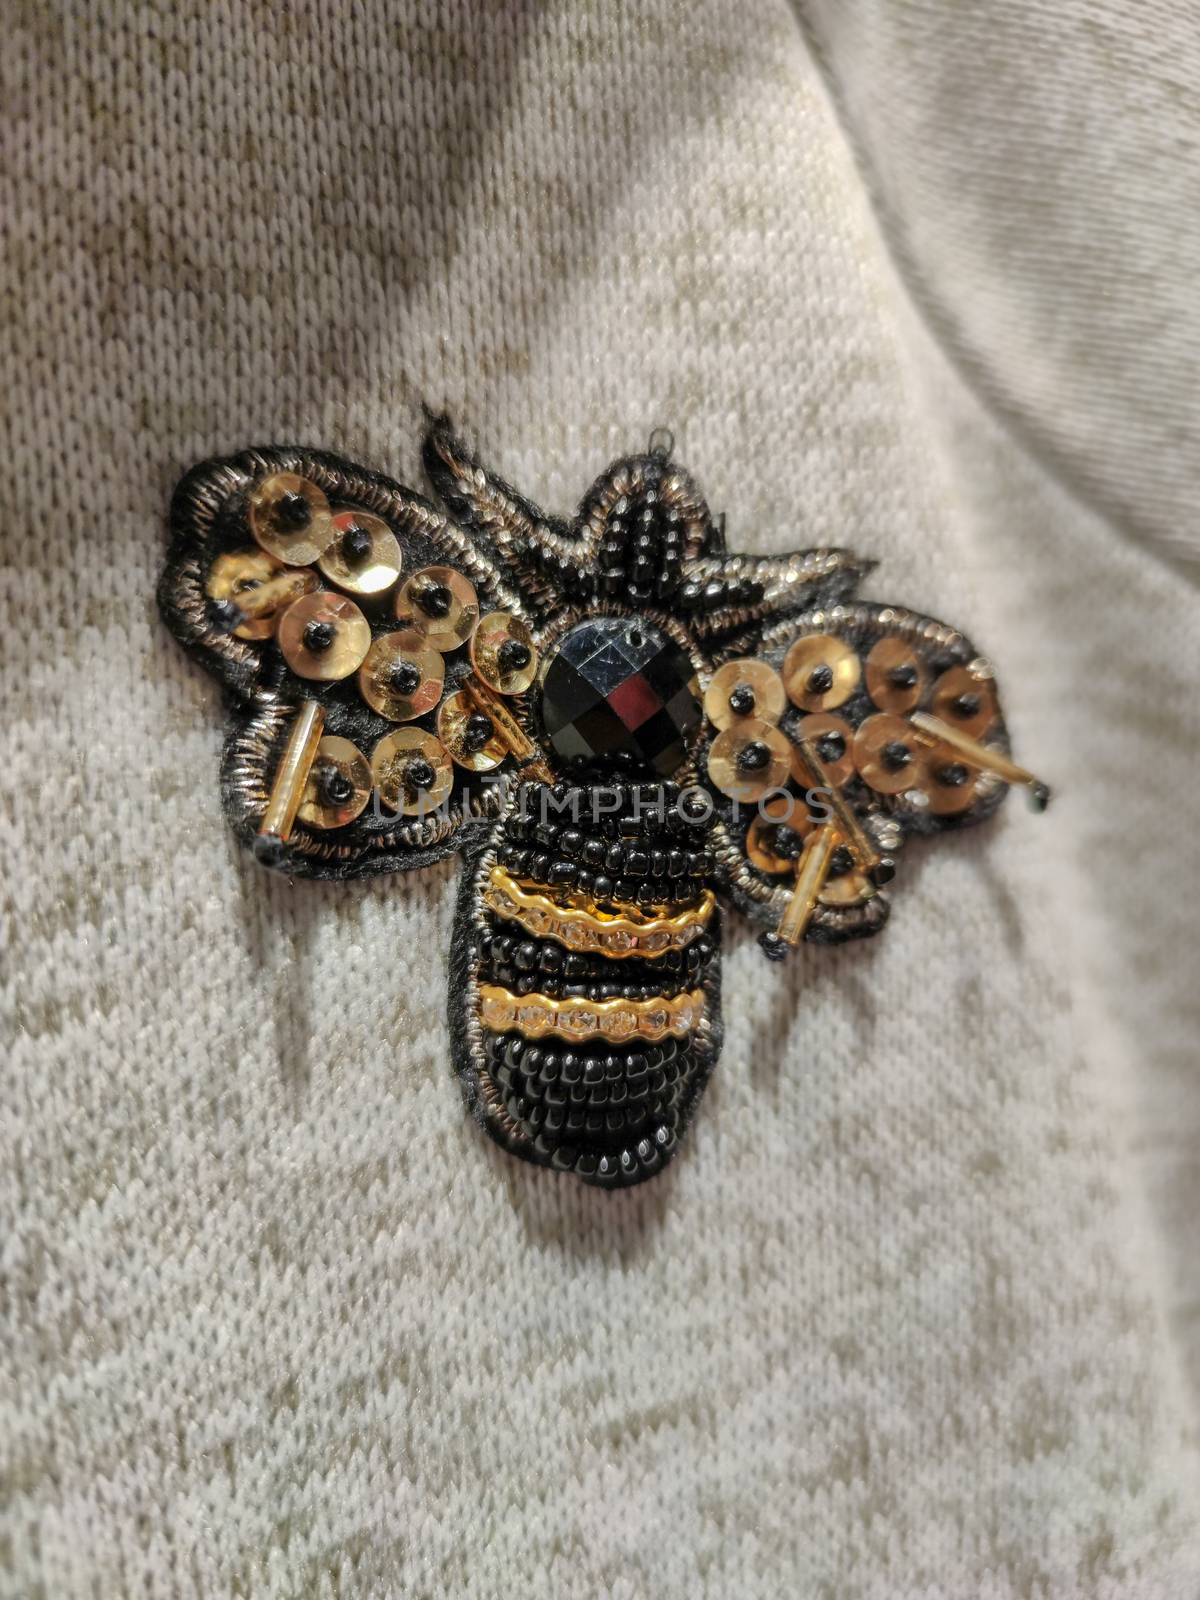 a bee sticker on a sweater by devoxer